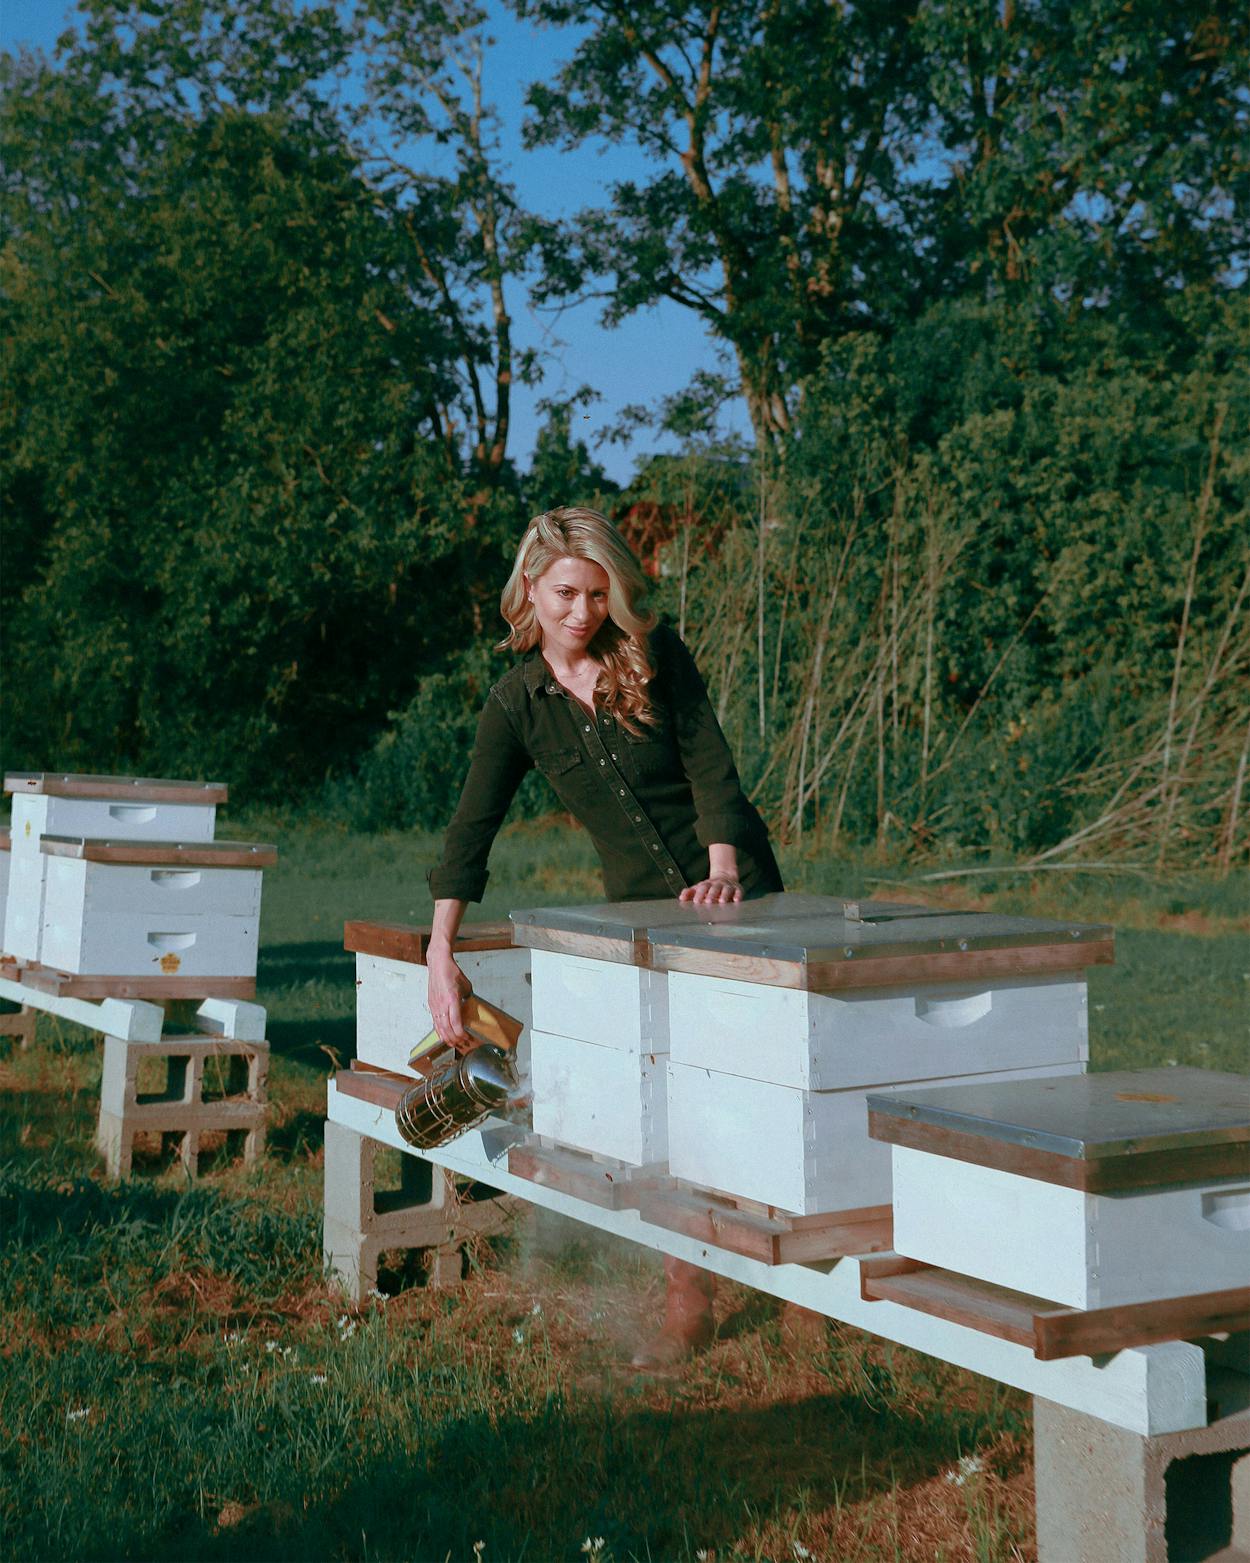 Erika Thompson tending to her bees outside her home on September 18, 2020.